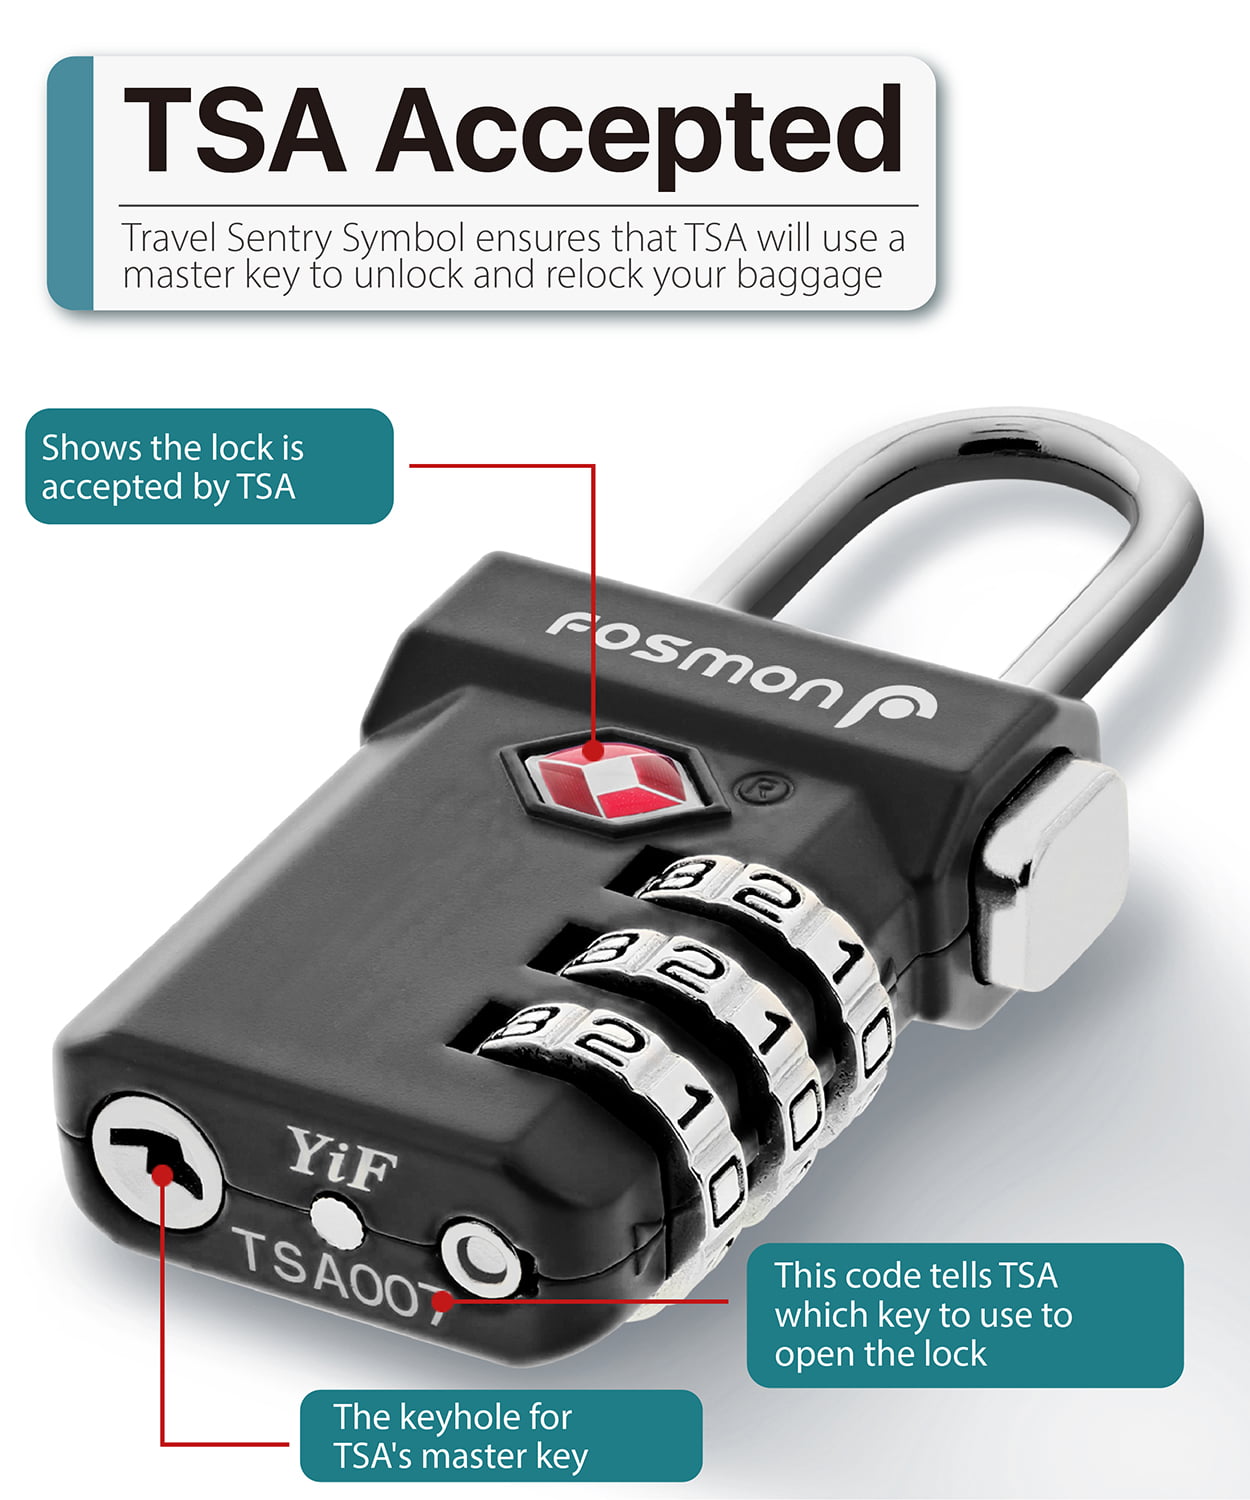 TSA Lock Keys, Luggage Locks & How to Reset Them